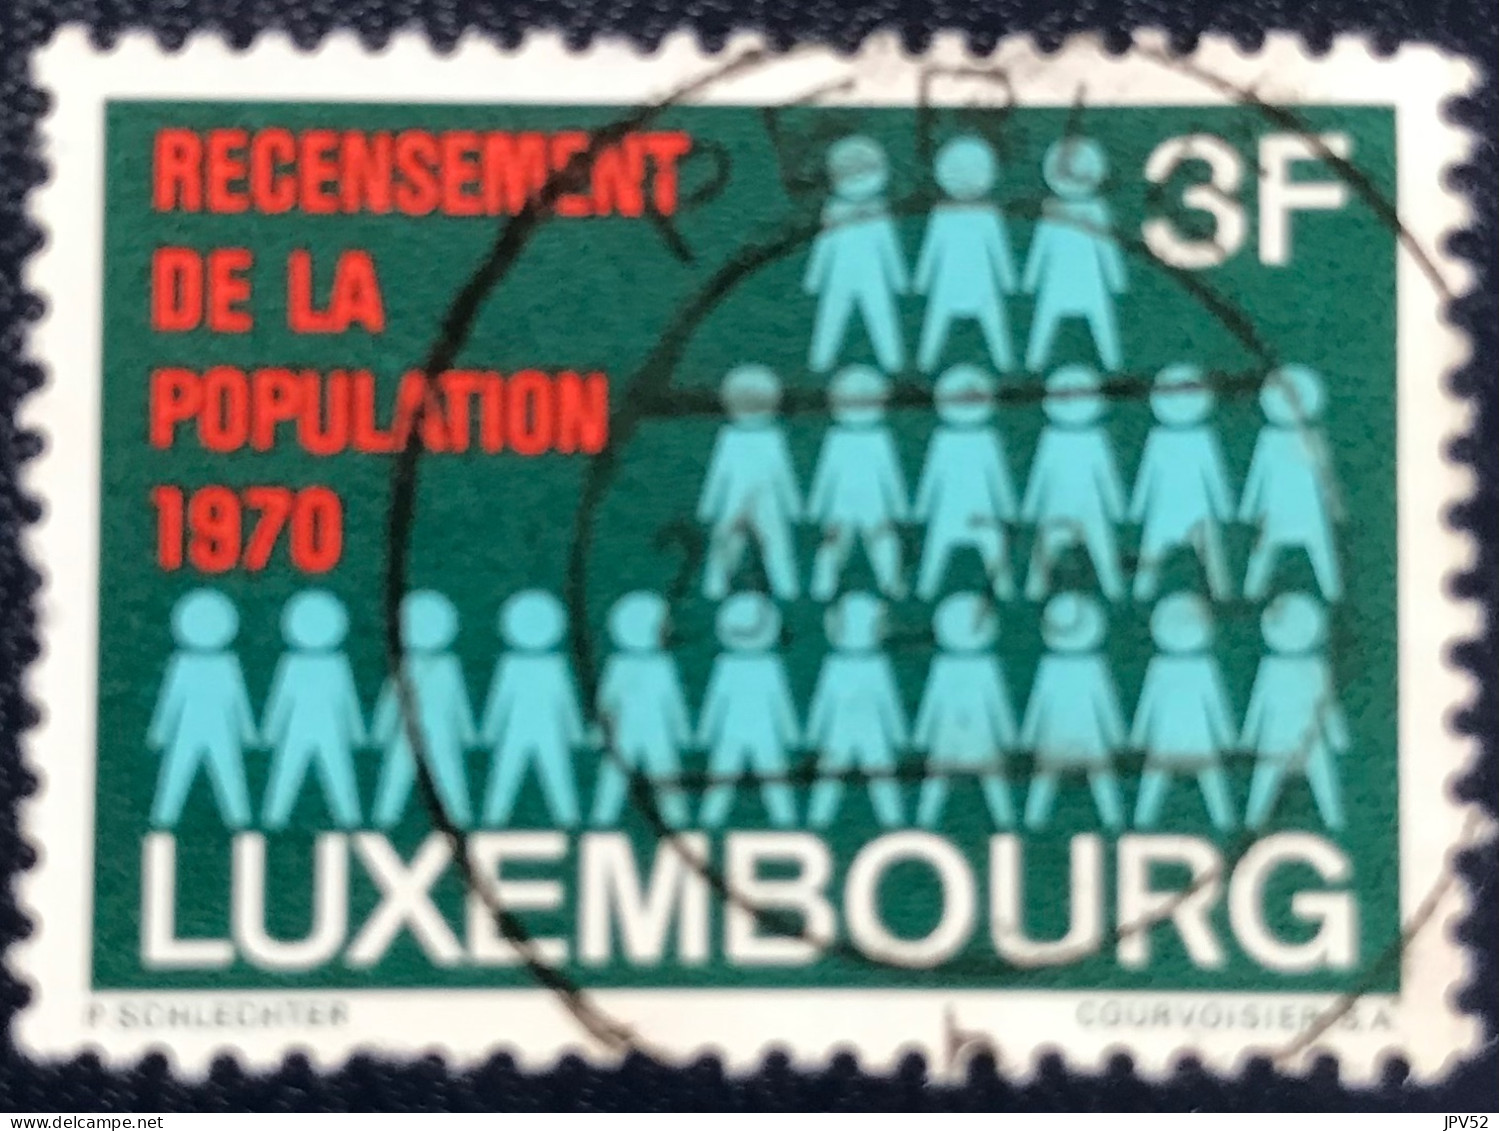 Luxembourg - Luxemburg - C18/31 - 1970 - (°)used - Michel 811 - Bevolkingspictogram - Gebraucht